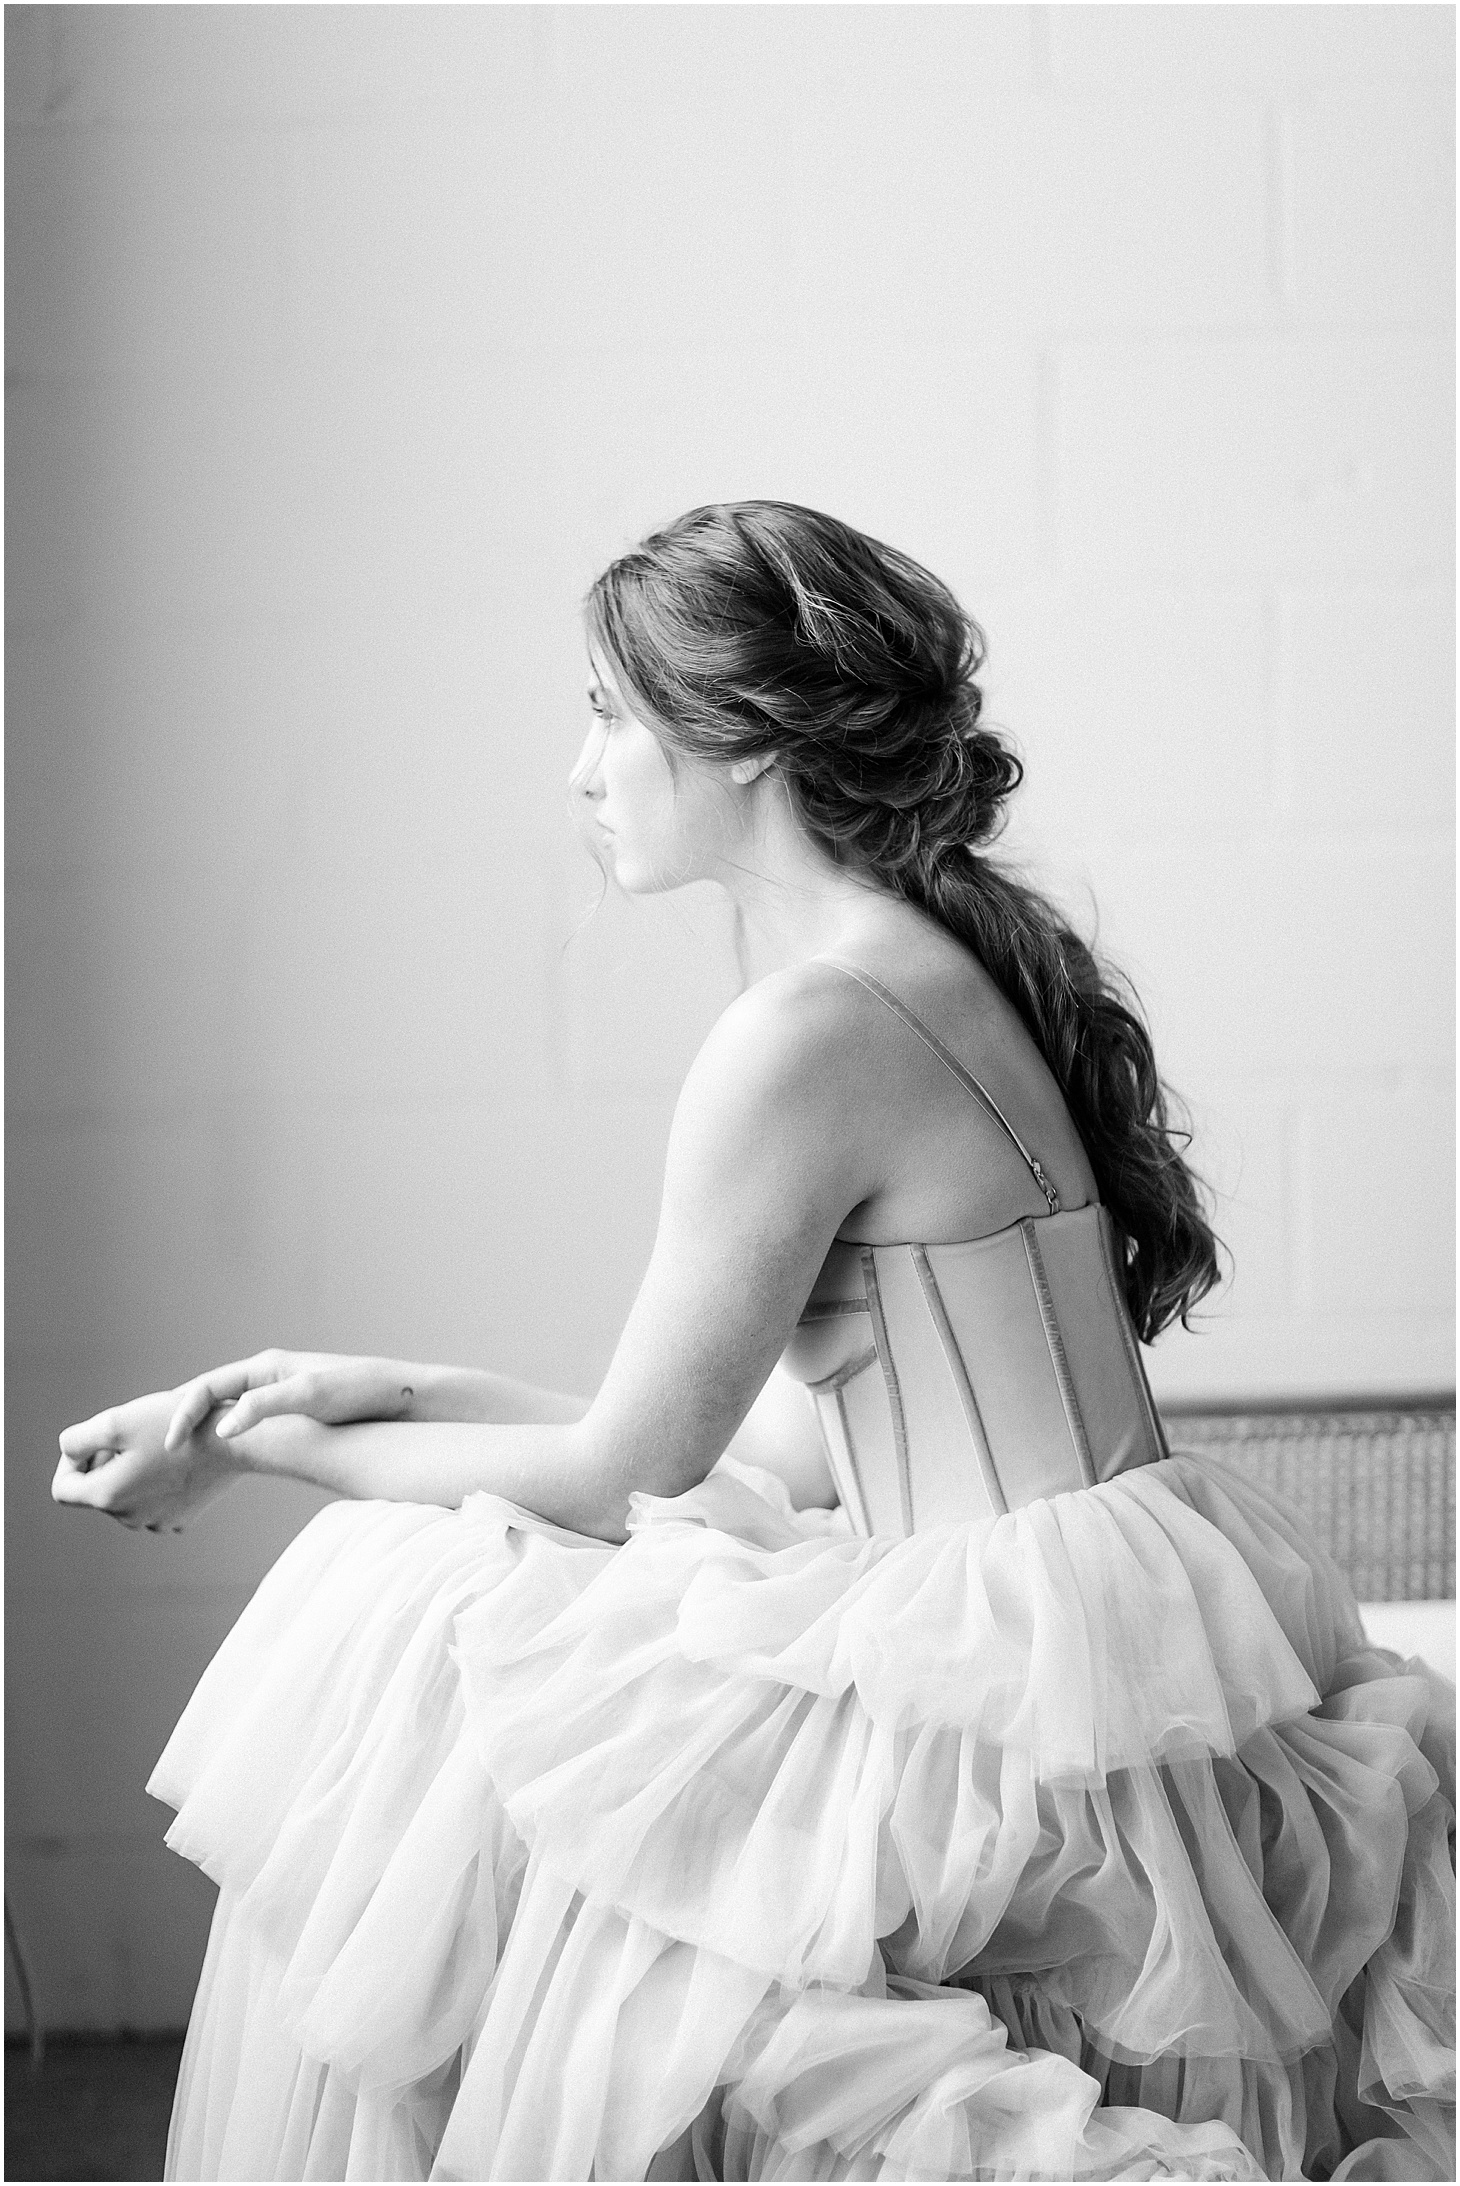 Beauty in the Ashes Editorial | Sarah Bradshaw Photography | Washington DC Wedding Photographer